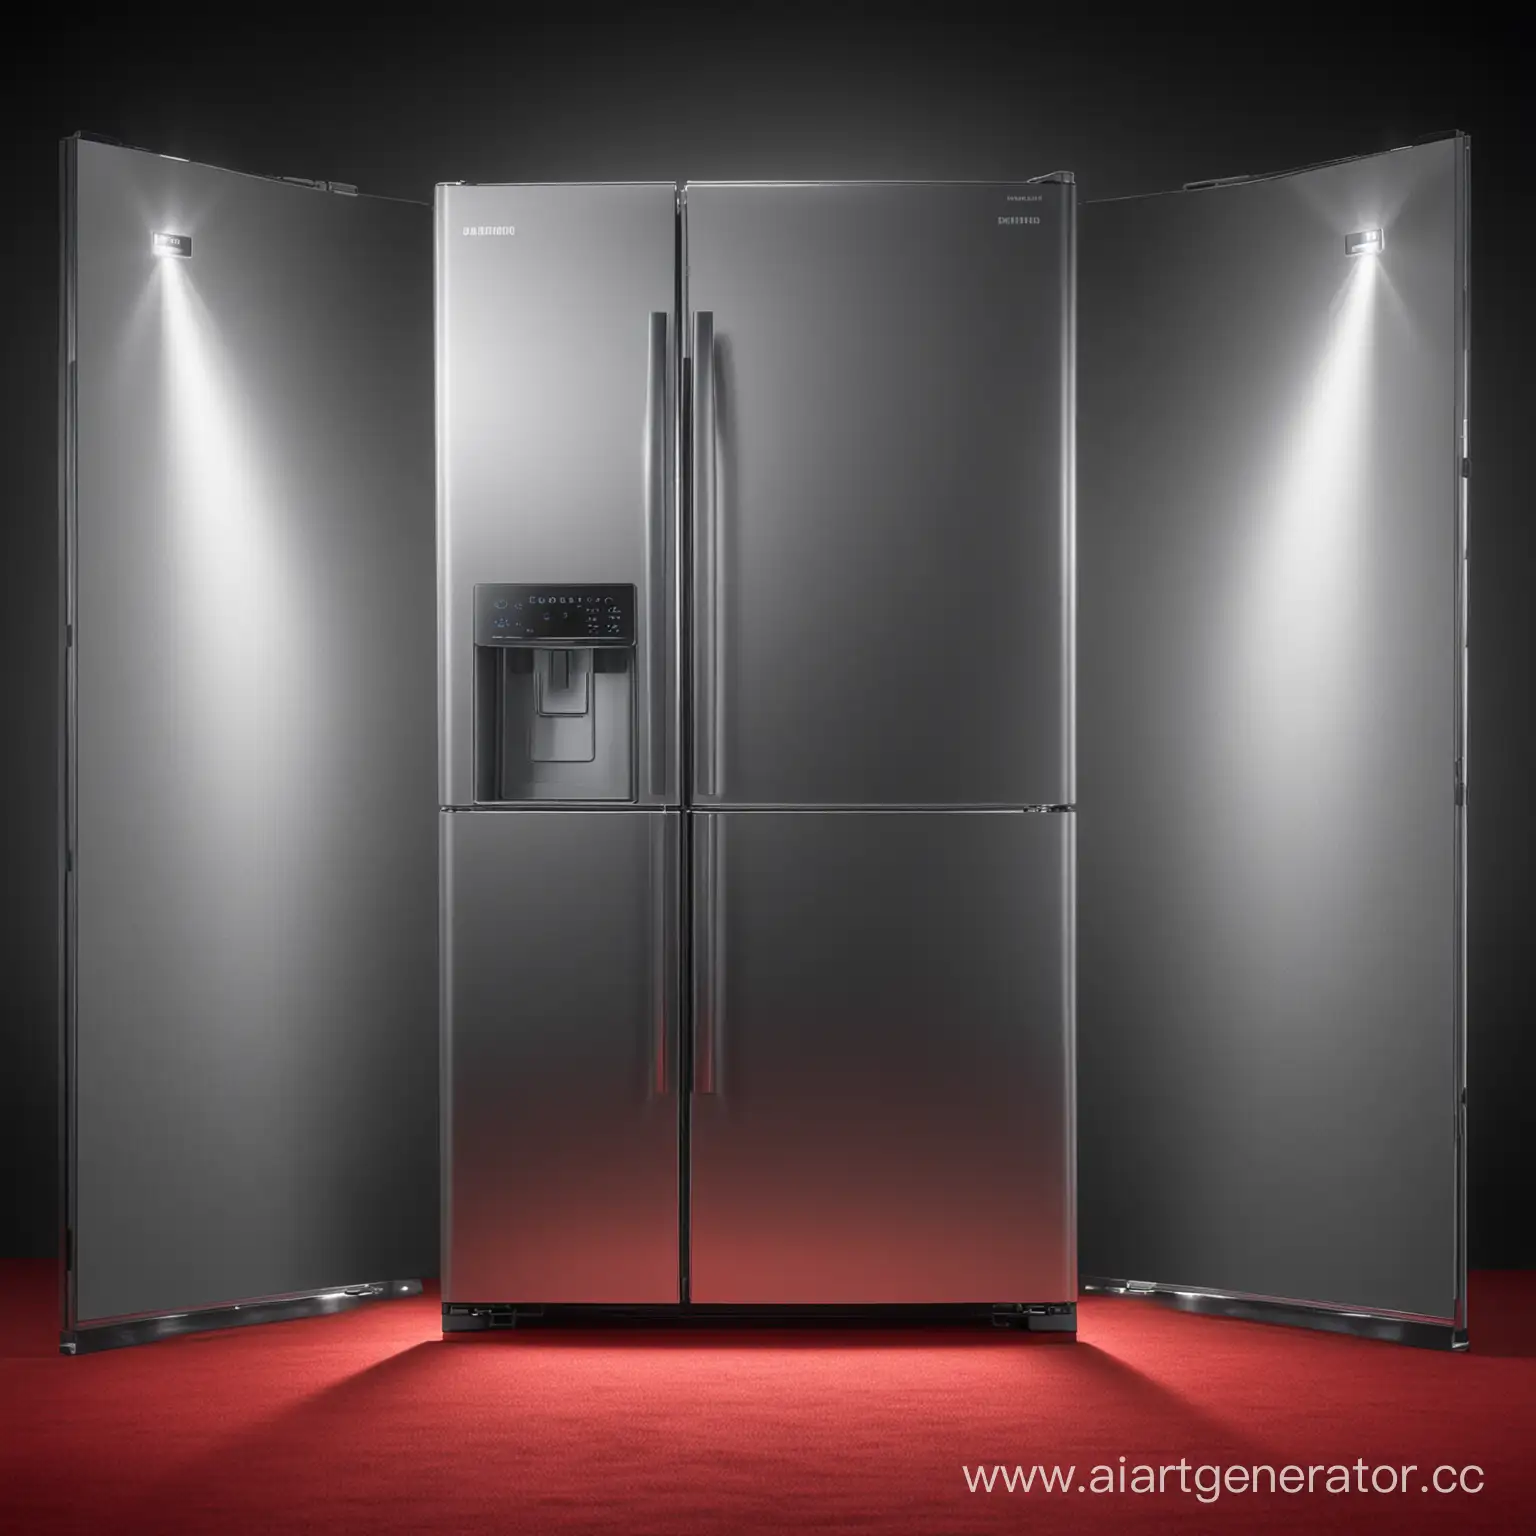 Luxurious-Samsung-Refrigerator-Spotlighted-on-Red-Carpet